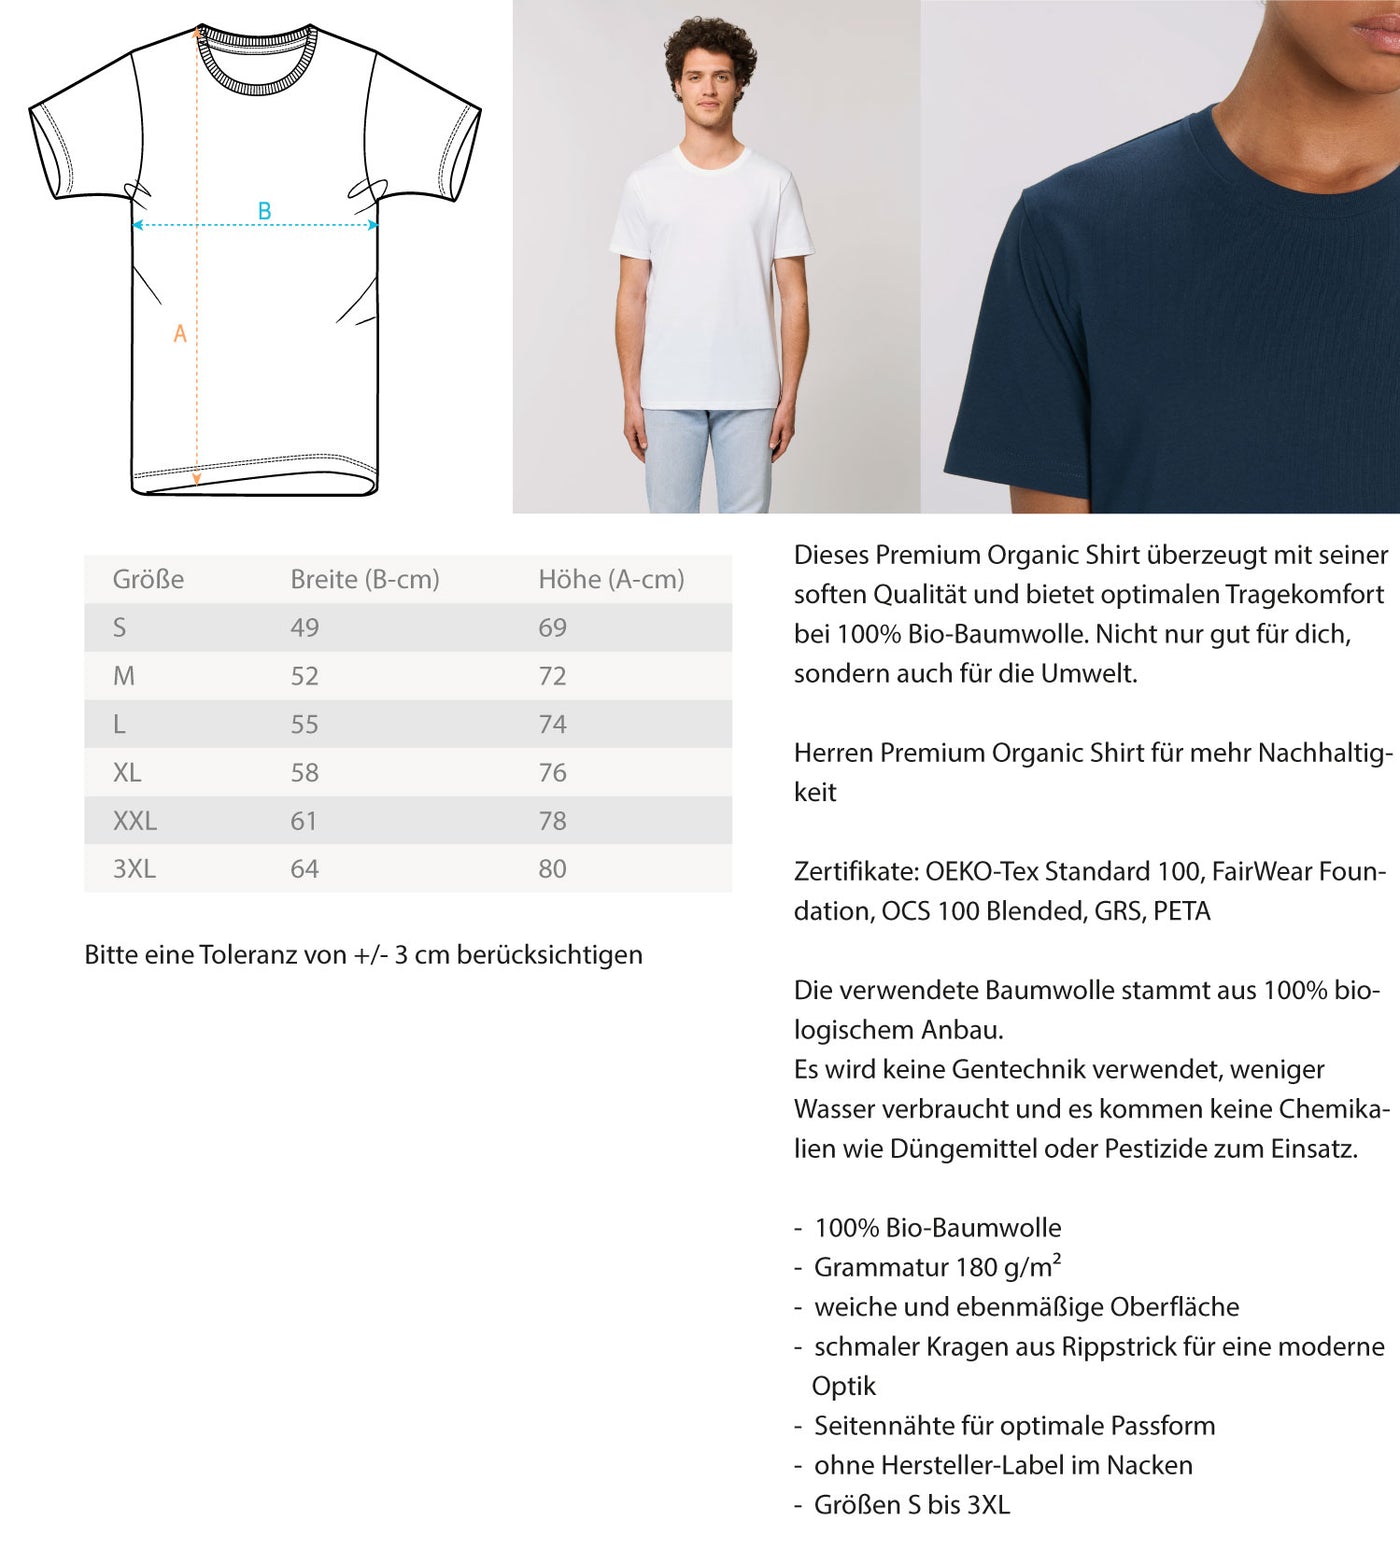 Ehemann, Vater, Bergsteiger, Held - Herren Premium Organic T-Shirt berge klettern